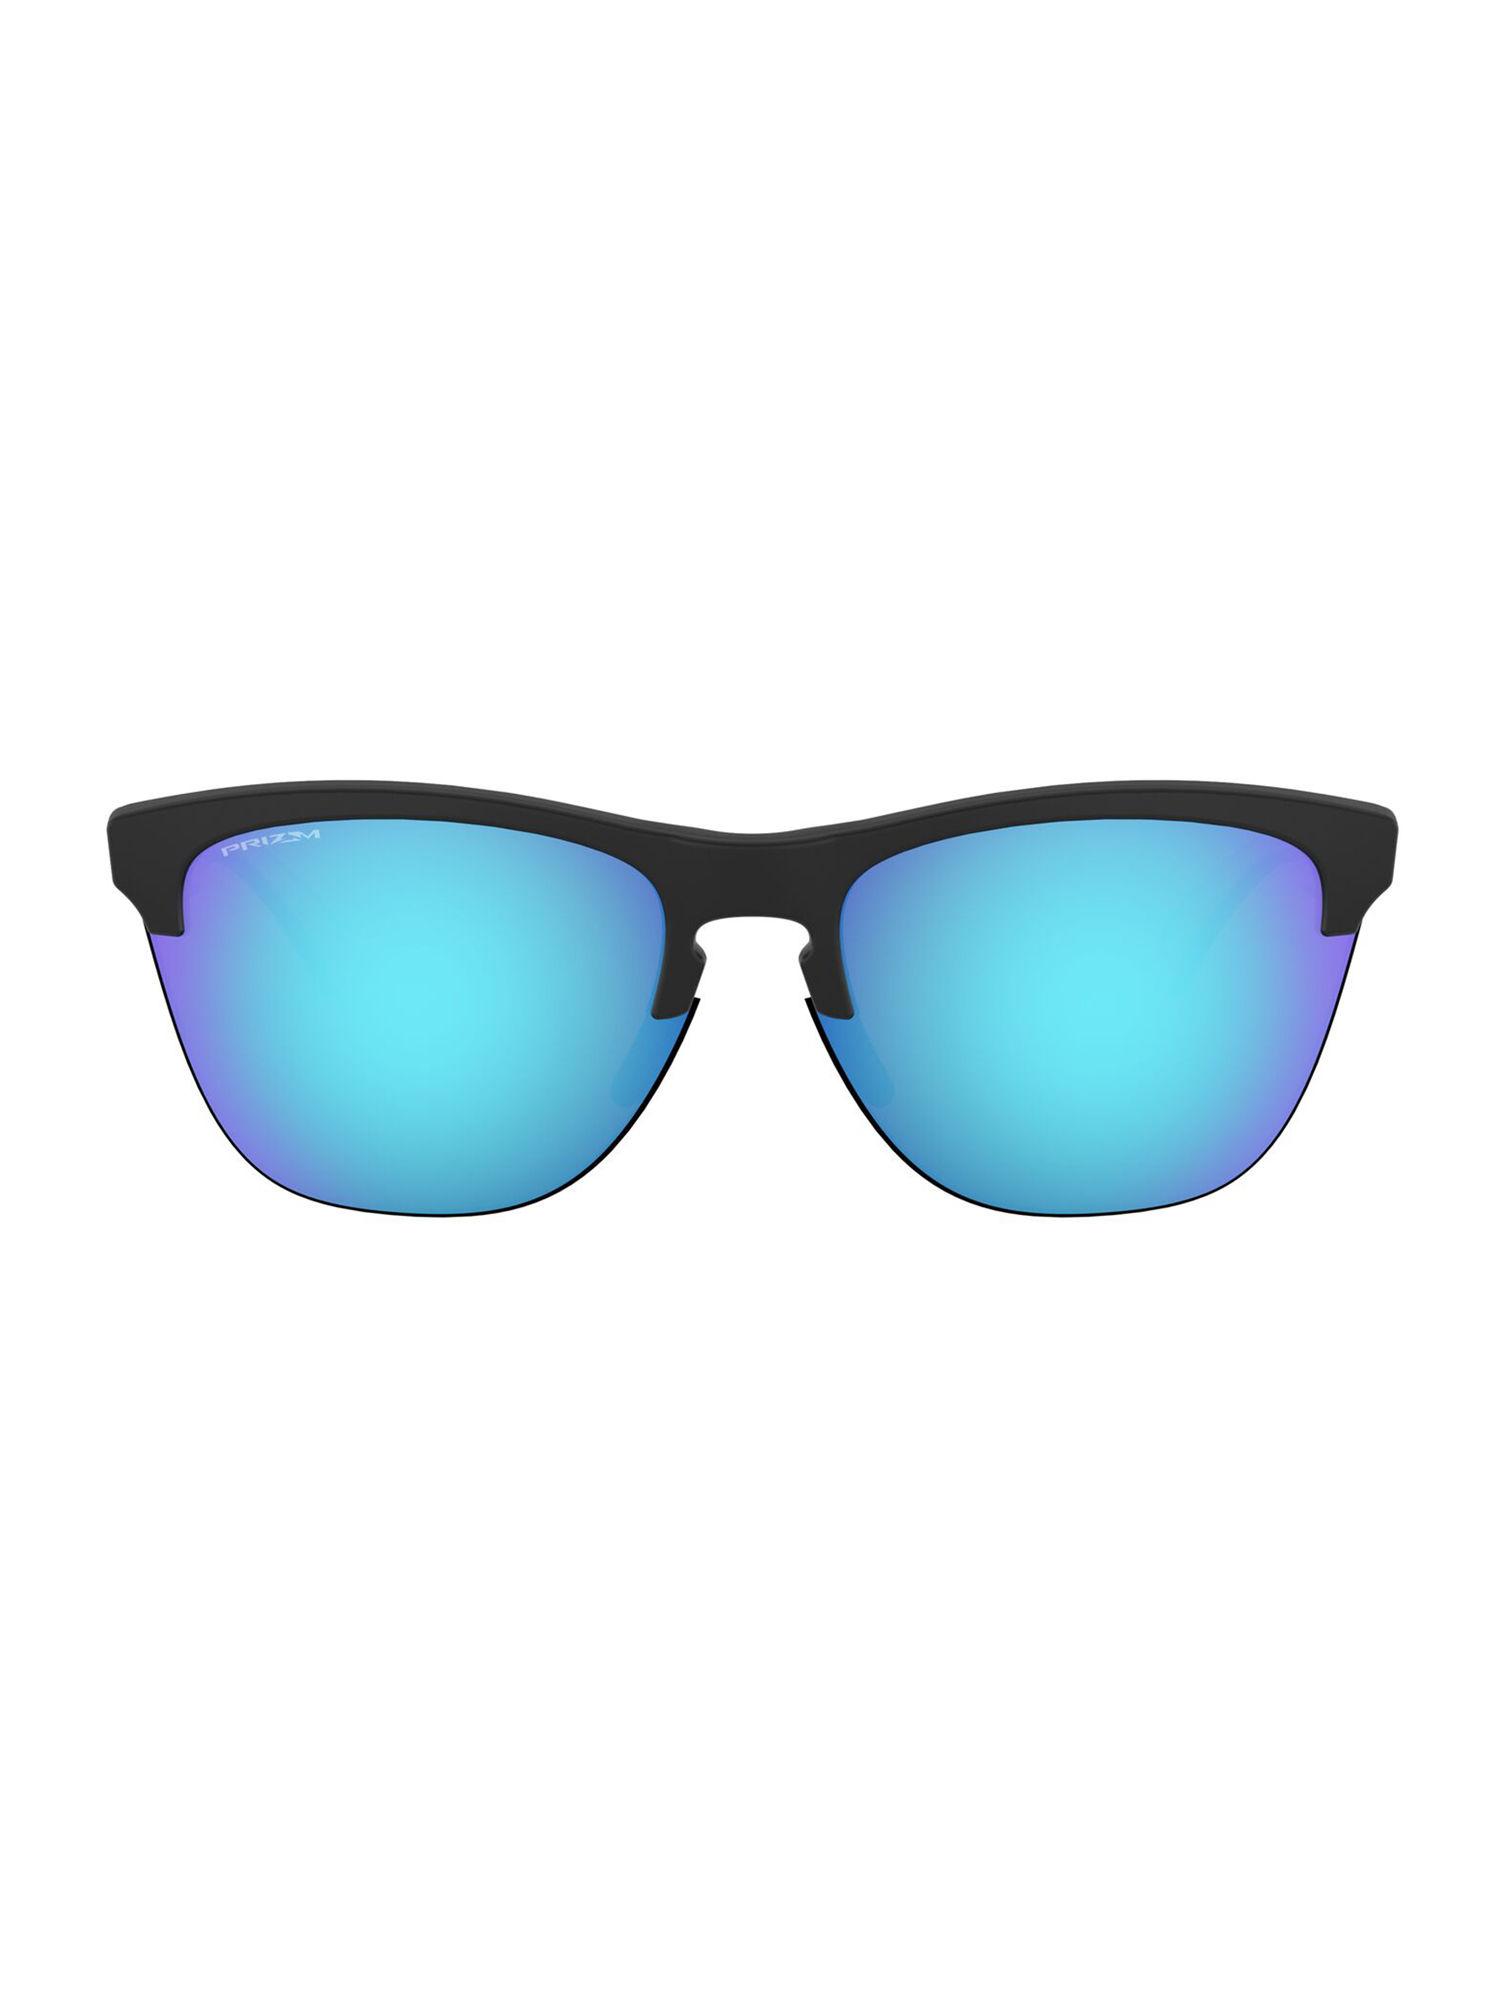 matte-black-sunglasses(0oo9374i|round-|black-frame|blue-lens-|63-mm-)